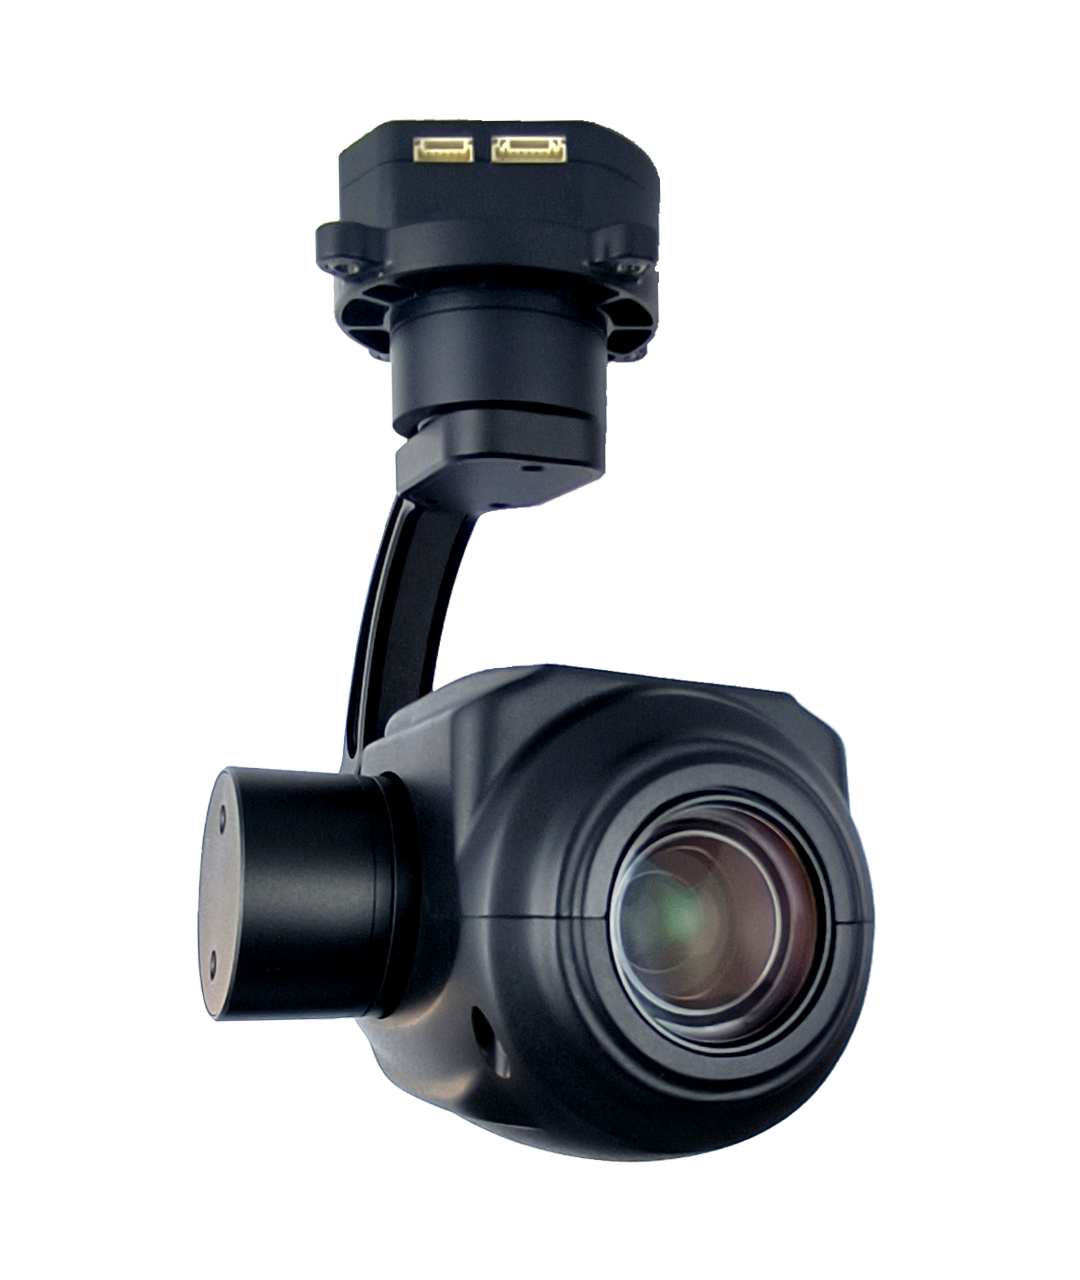 TOPOTEK KHP4KS585 Drone Gimbal Camera - 4K Resolution 4x Optical Zoom 3-Axis Stabilized Gimbal IP/HDMI output